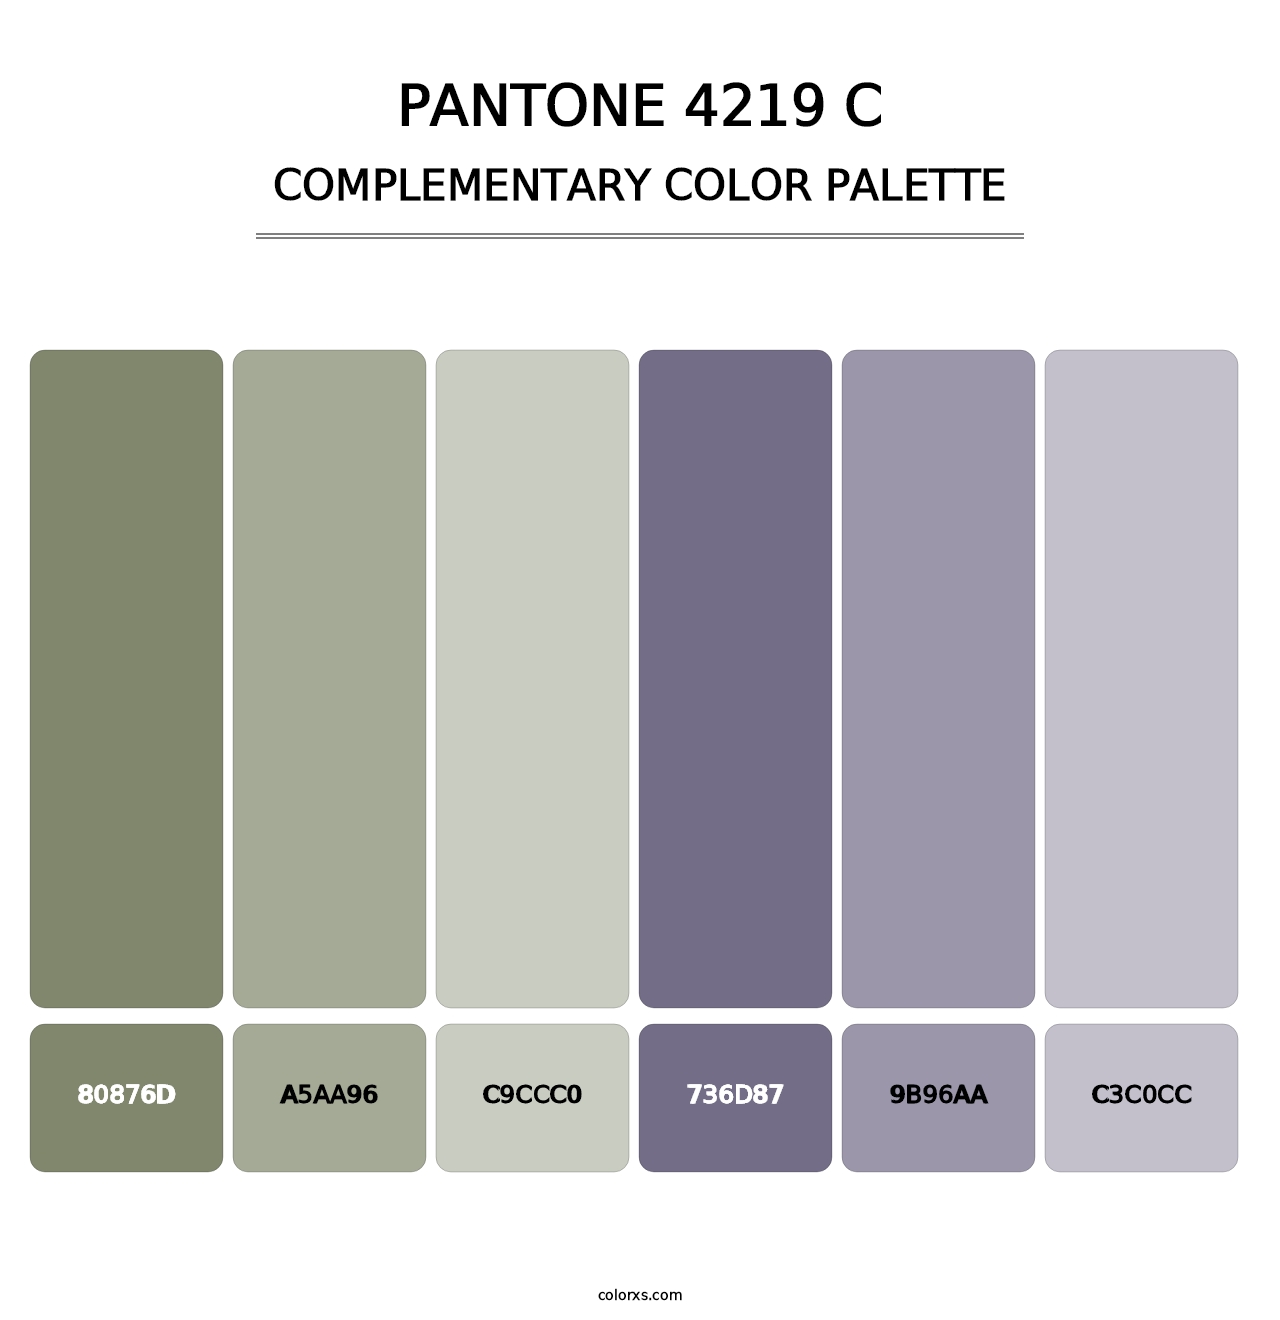 PANTONE 4219 C - Complementary Color Palette